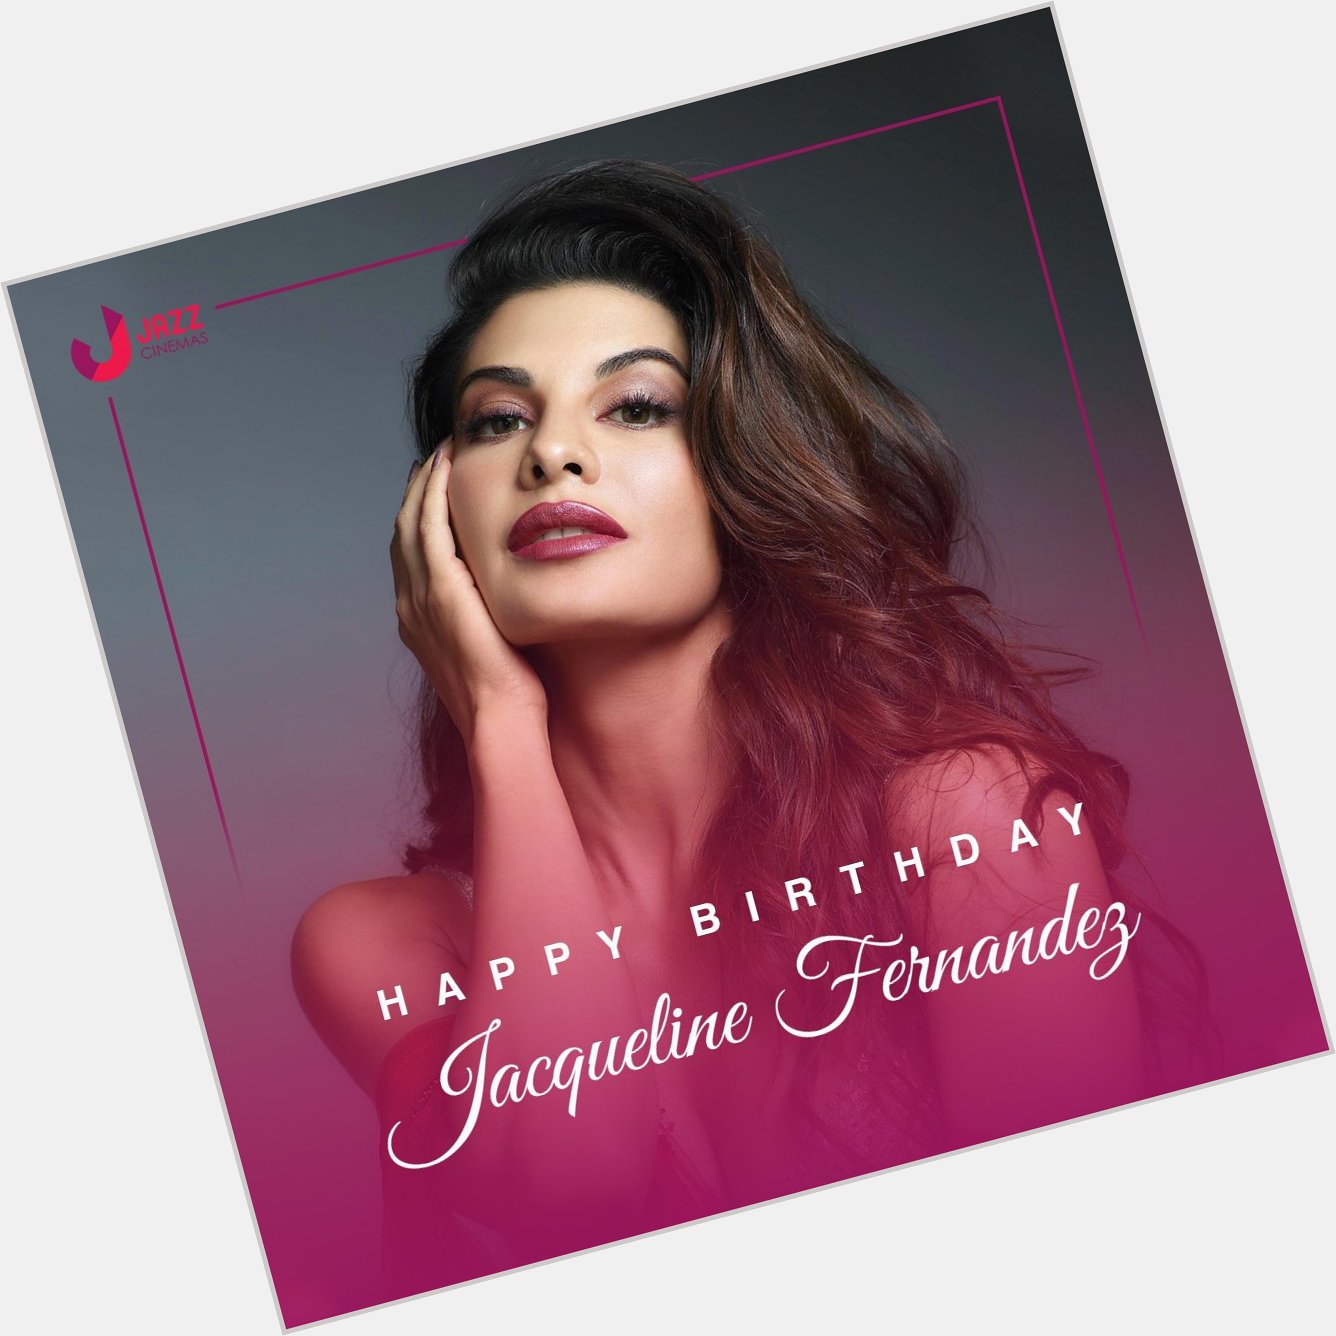  Happy birthday to Jacqueline Fernandez my sweet heart 